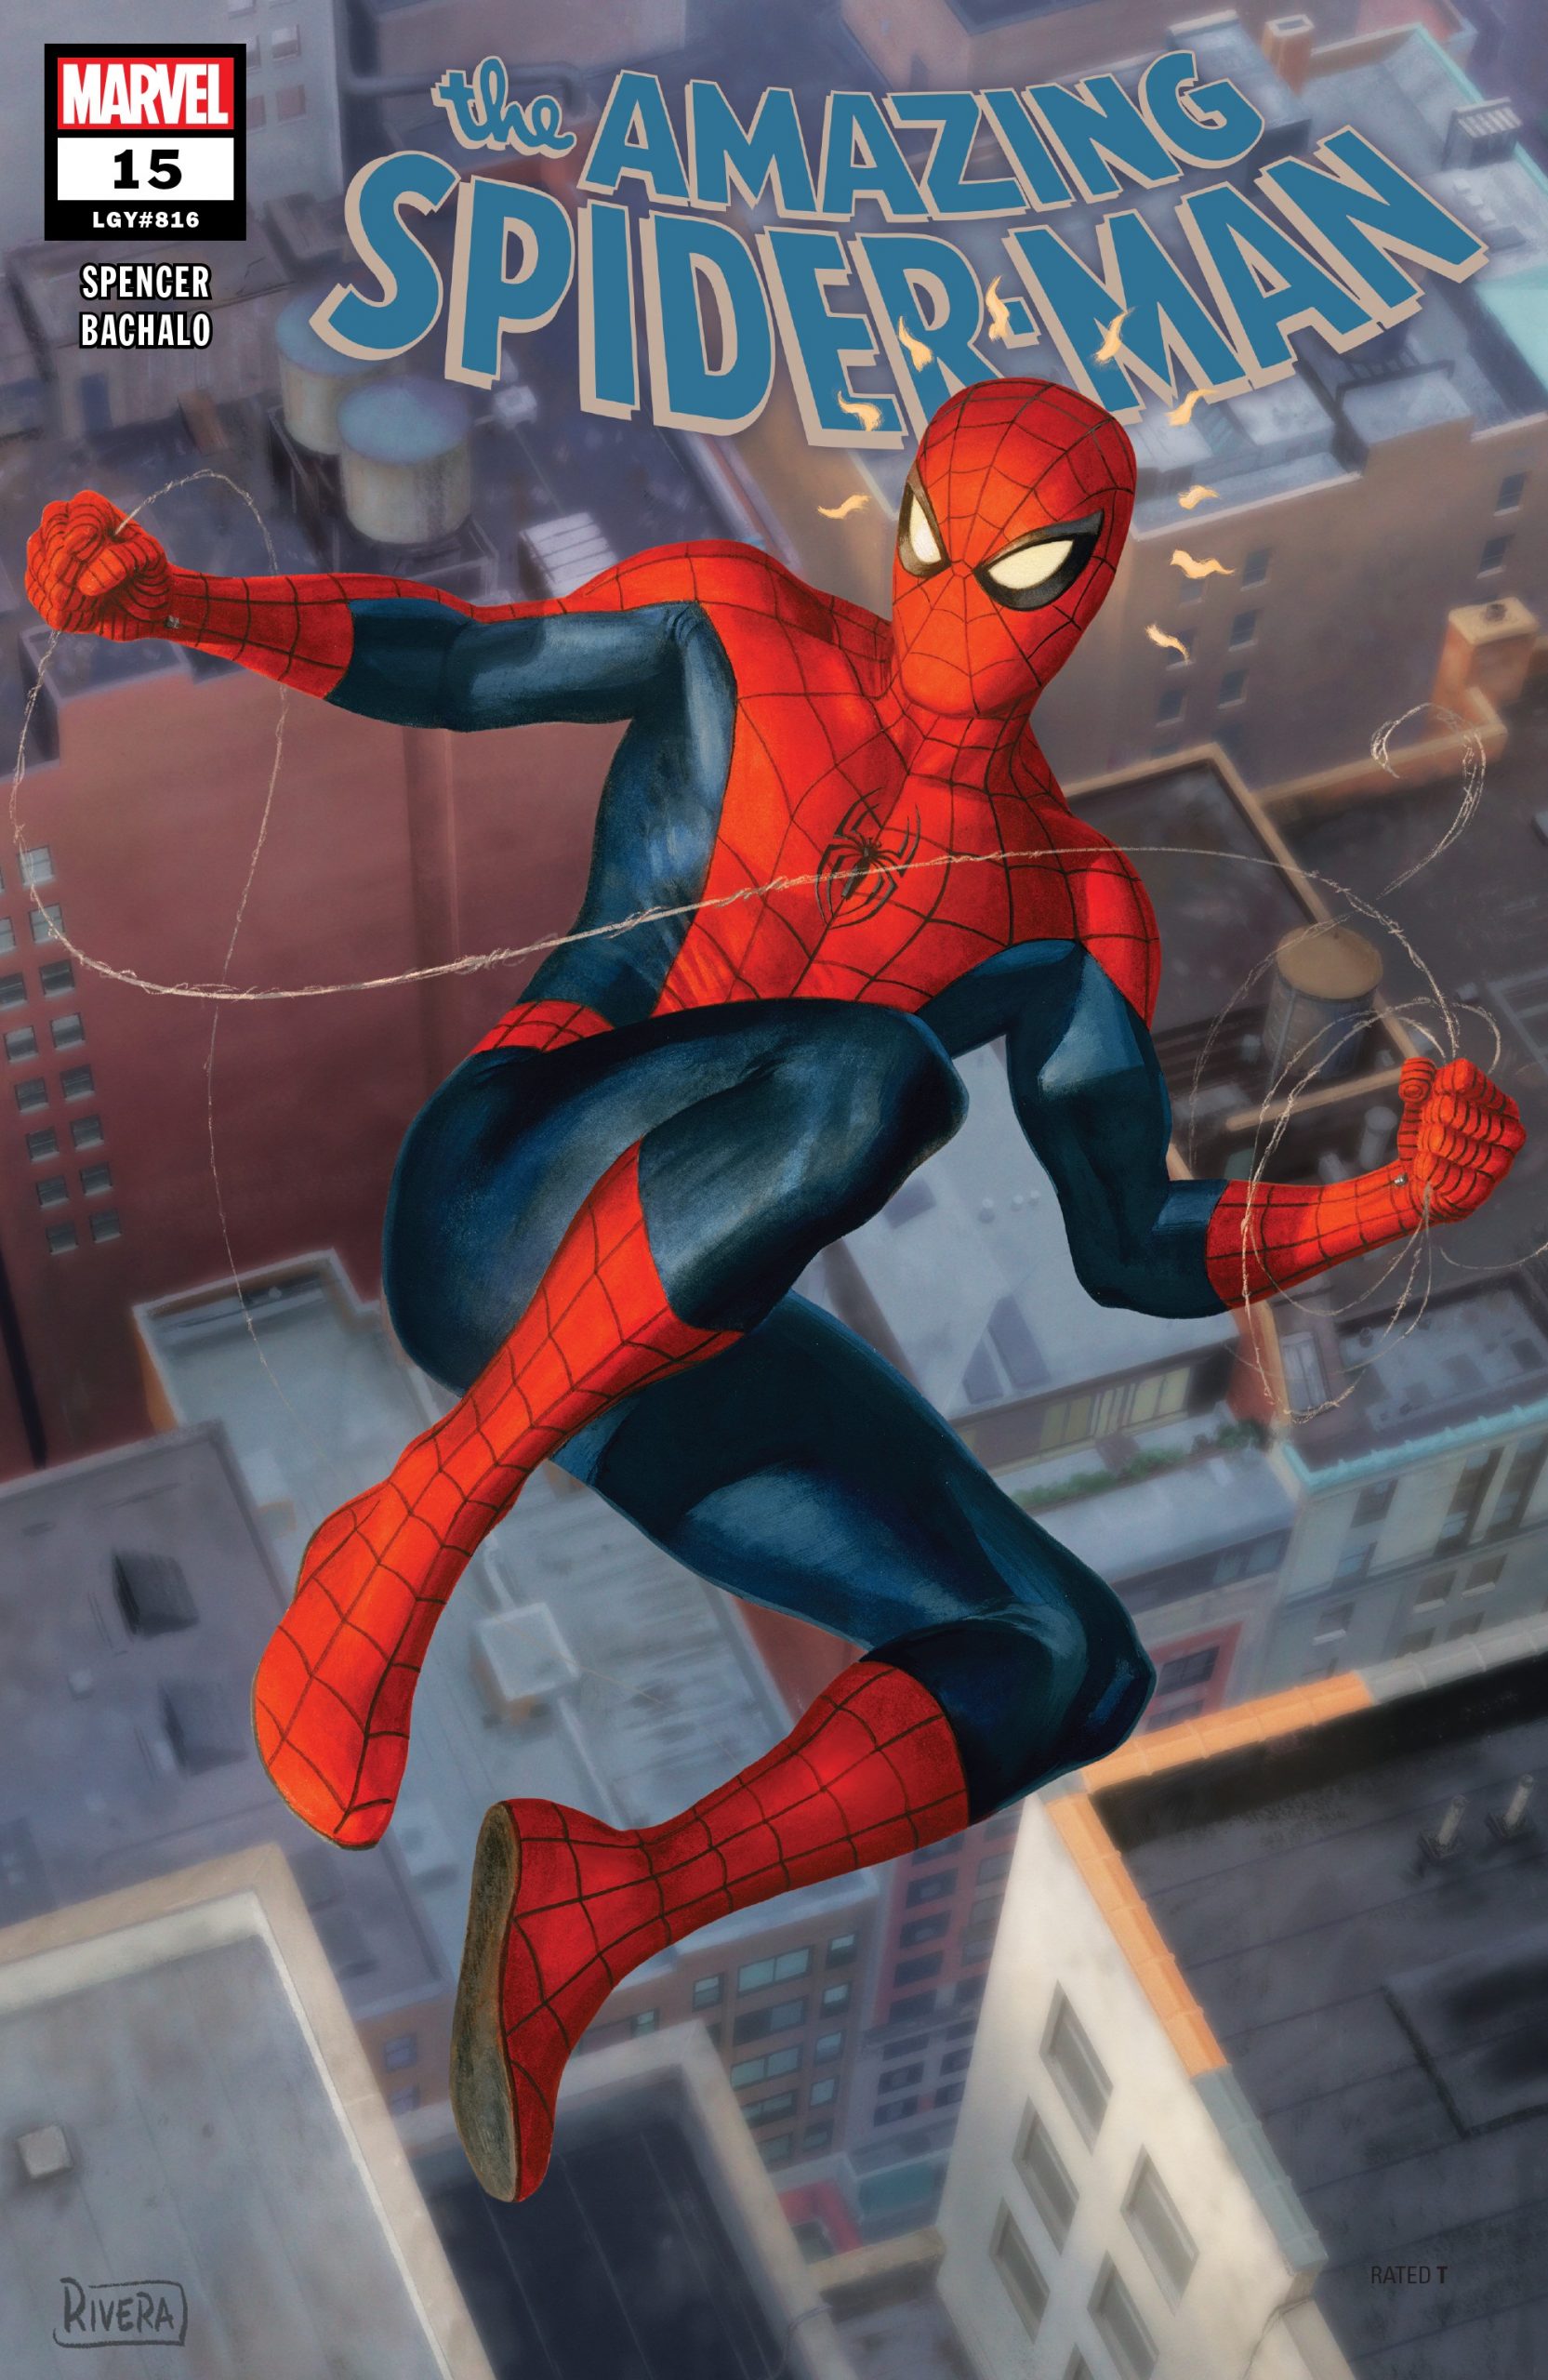 https://langgeek.net/wp-content/webpc-passthru.php?src=https://langgeek.net/wp-content/uploads/2022/01/Amazing-Spider-Man-015-000-scaled.jpg&nocache=1